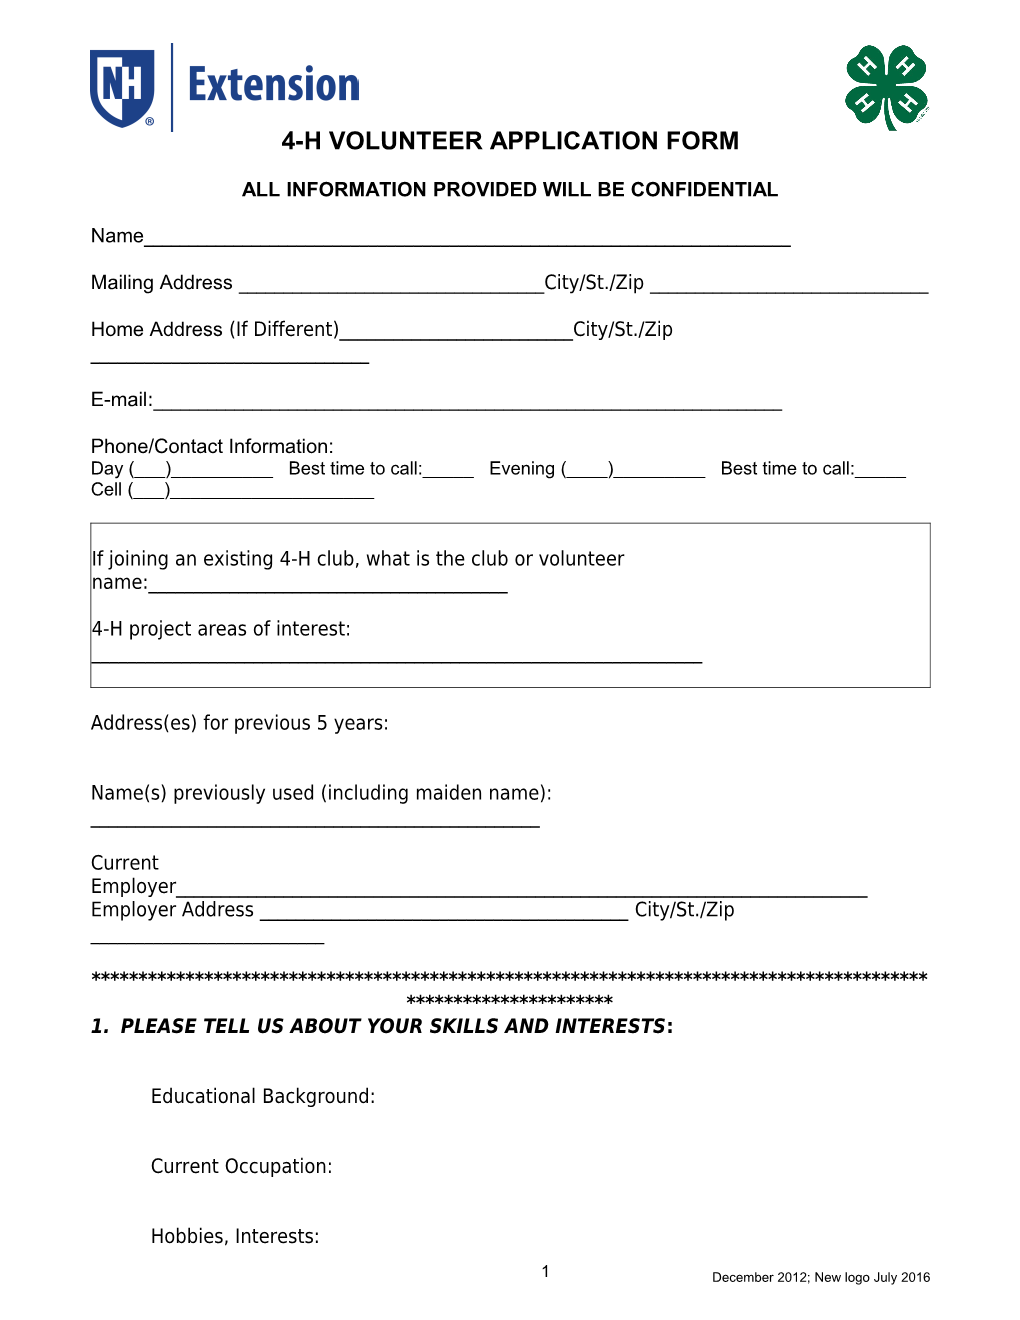 4-H Volunteer Application Form